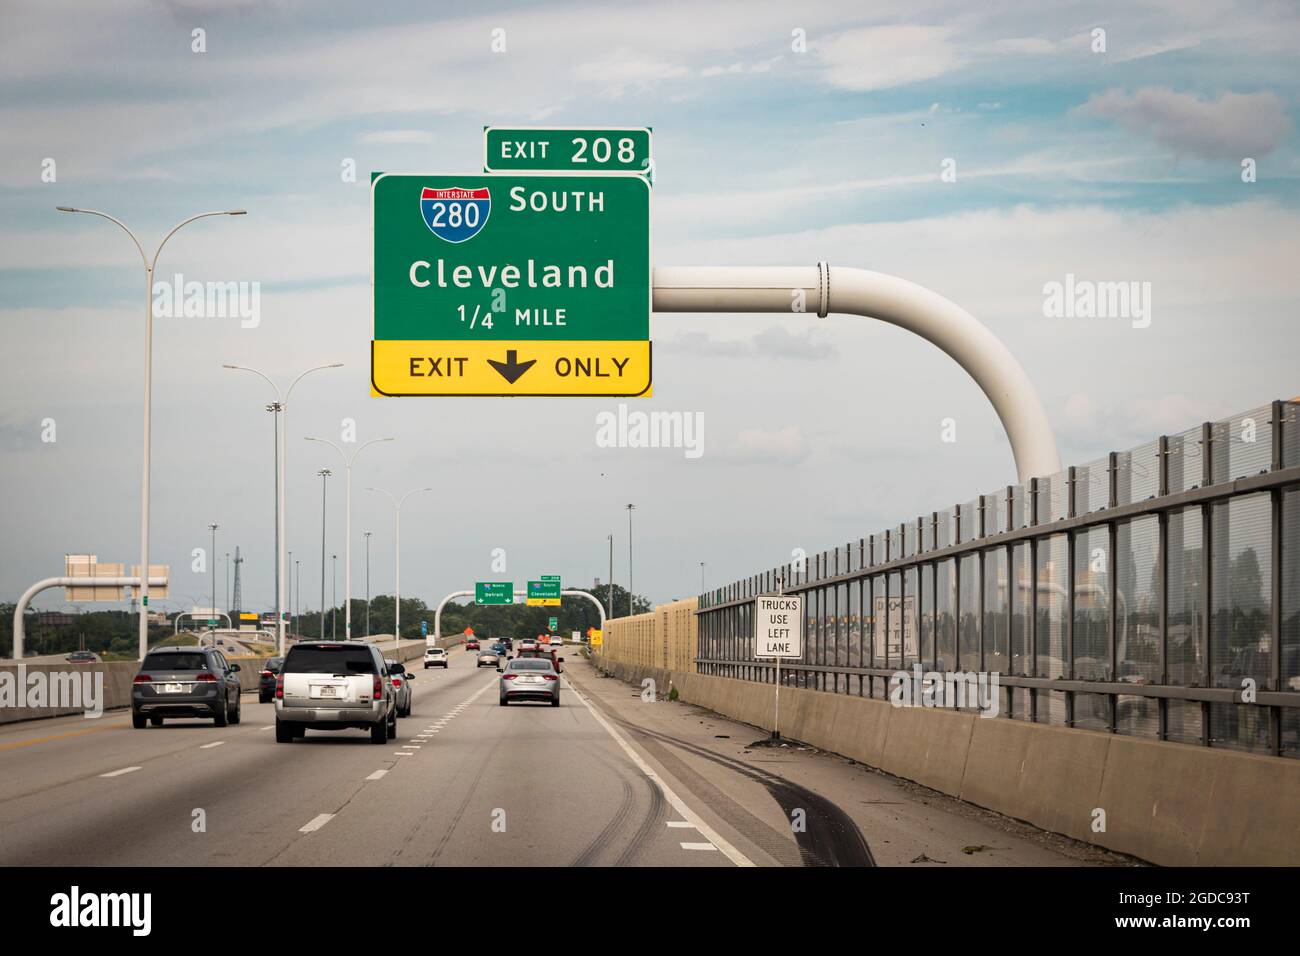 Segui le indicazioni per l'Interstate 75, indicando l'uscita per l'Interstate 280 verso Cleveland Foto Stock